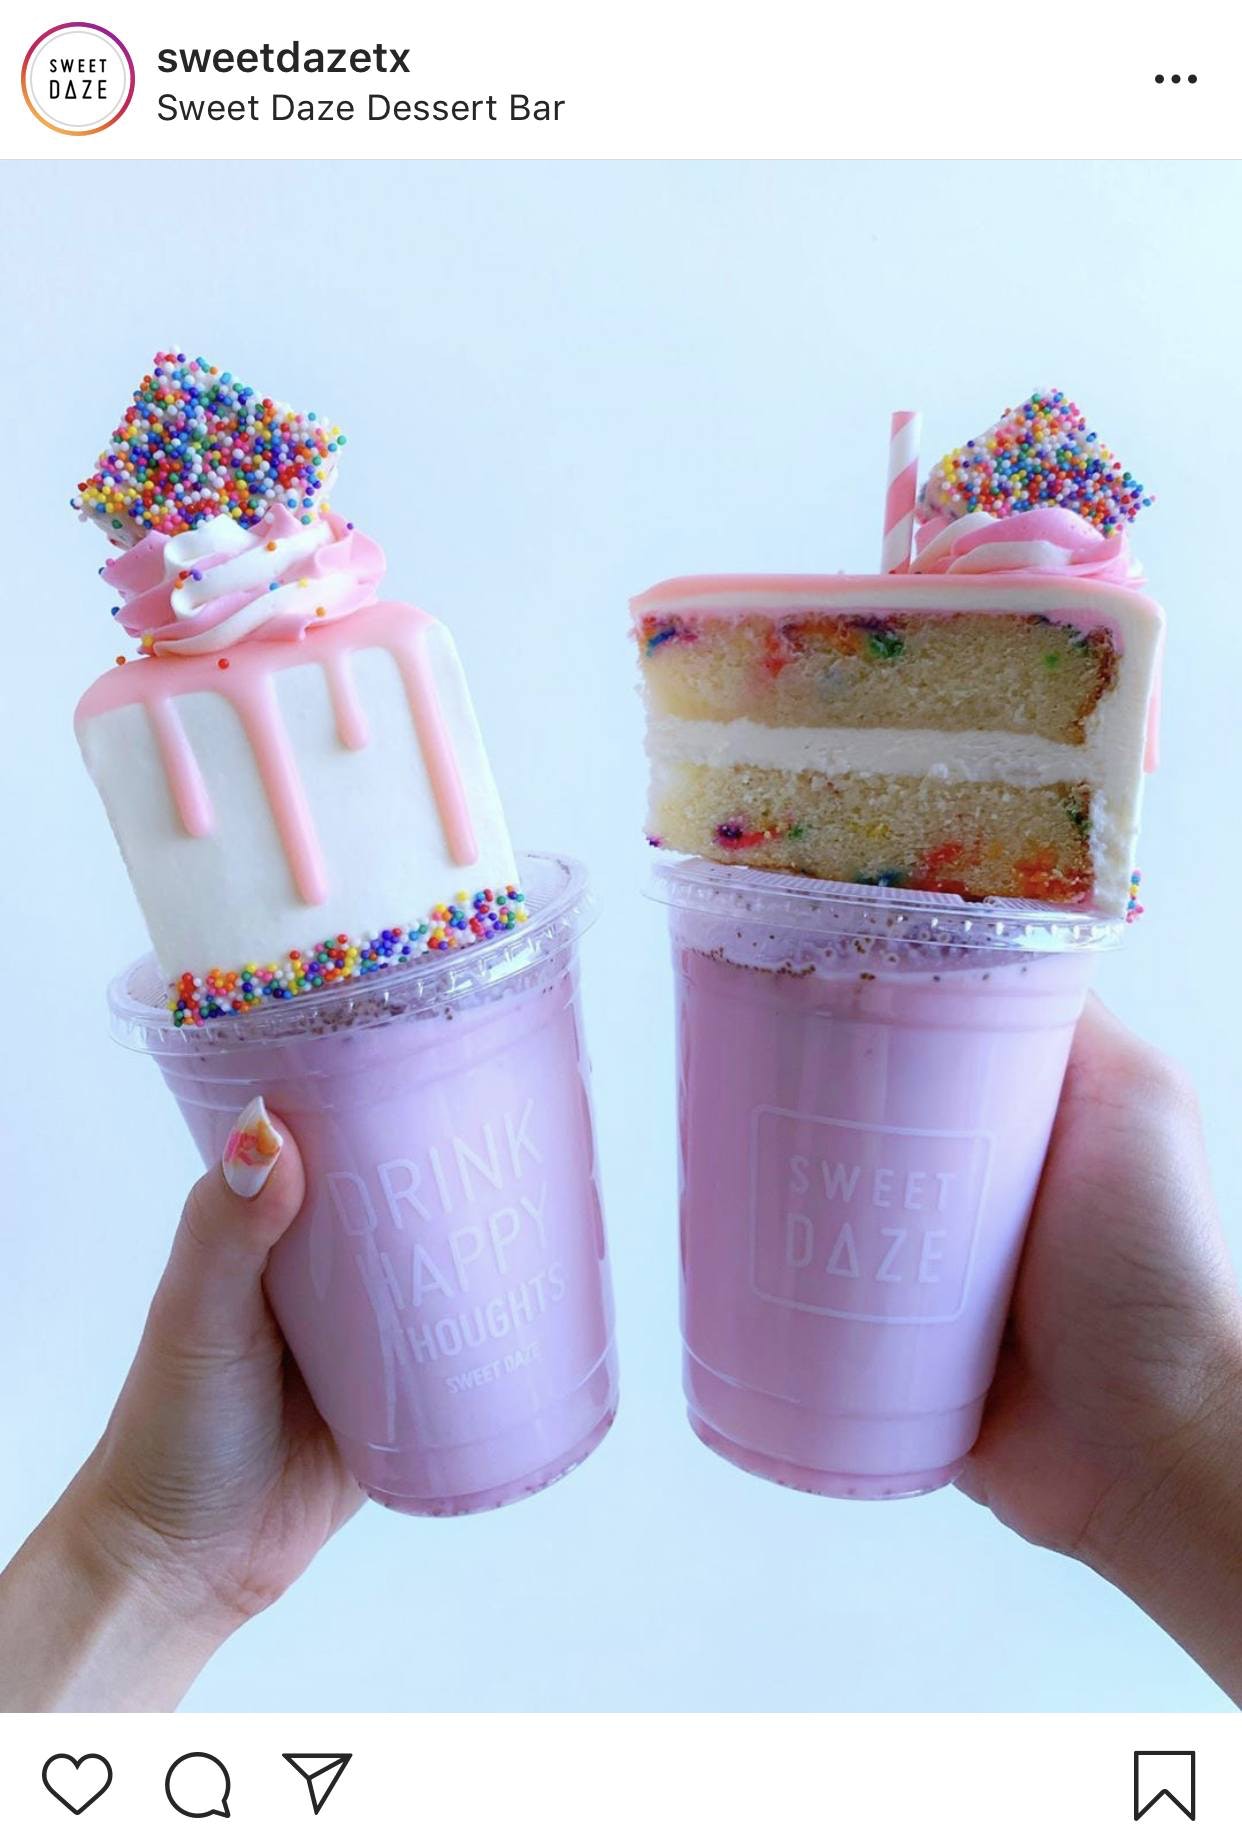 sweet daze dessert bar instagram profile